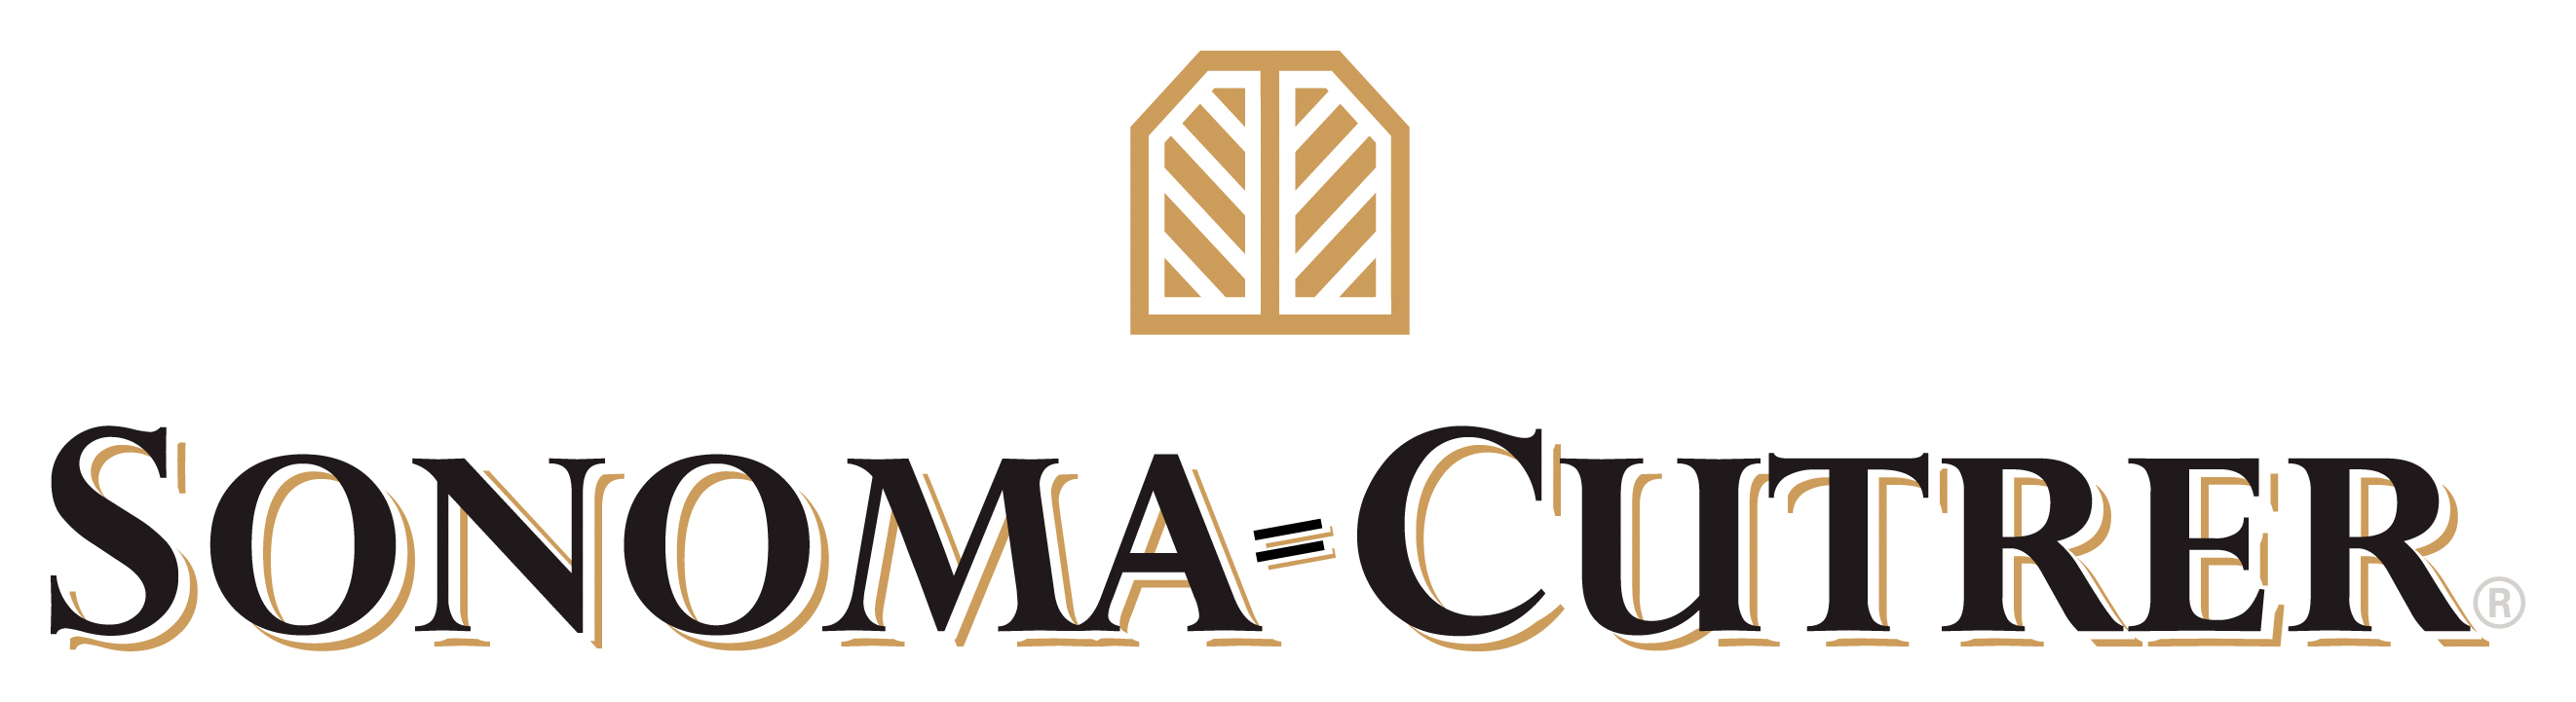 sonoma_cutrer-logo-SAW_client